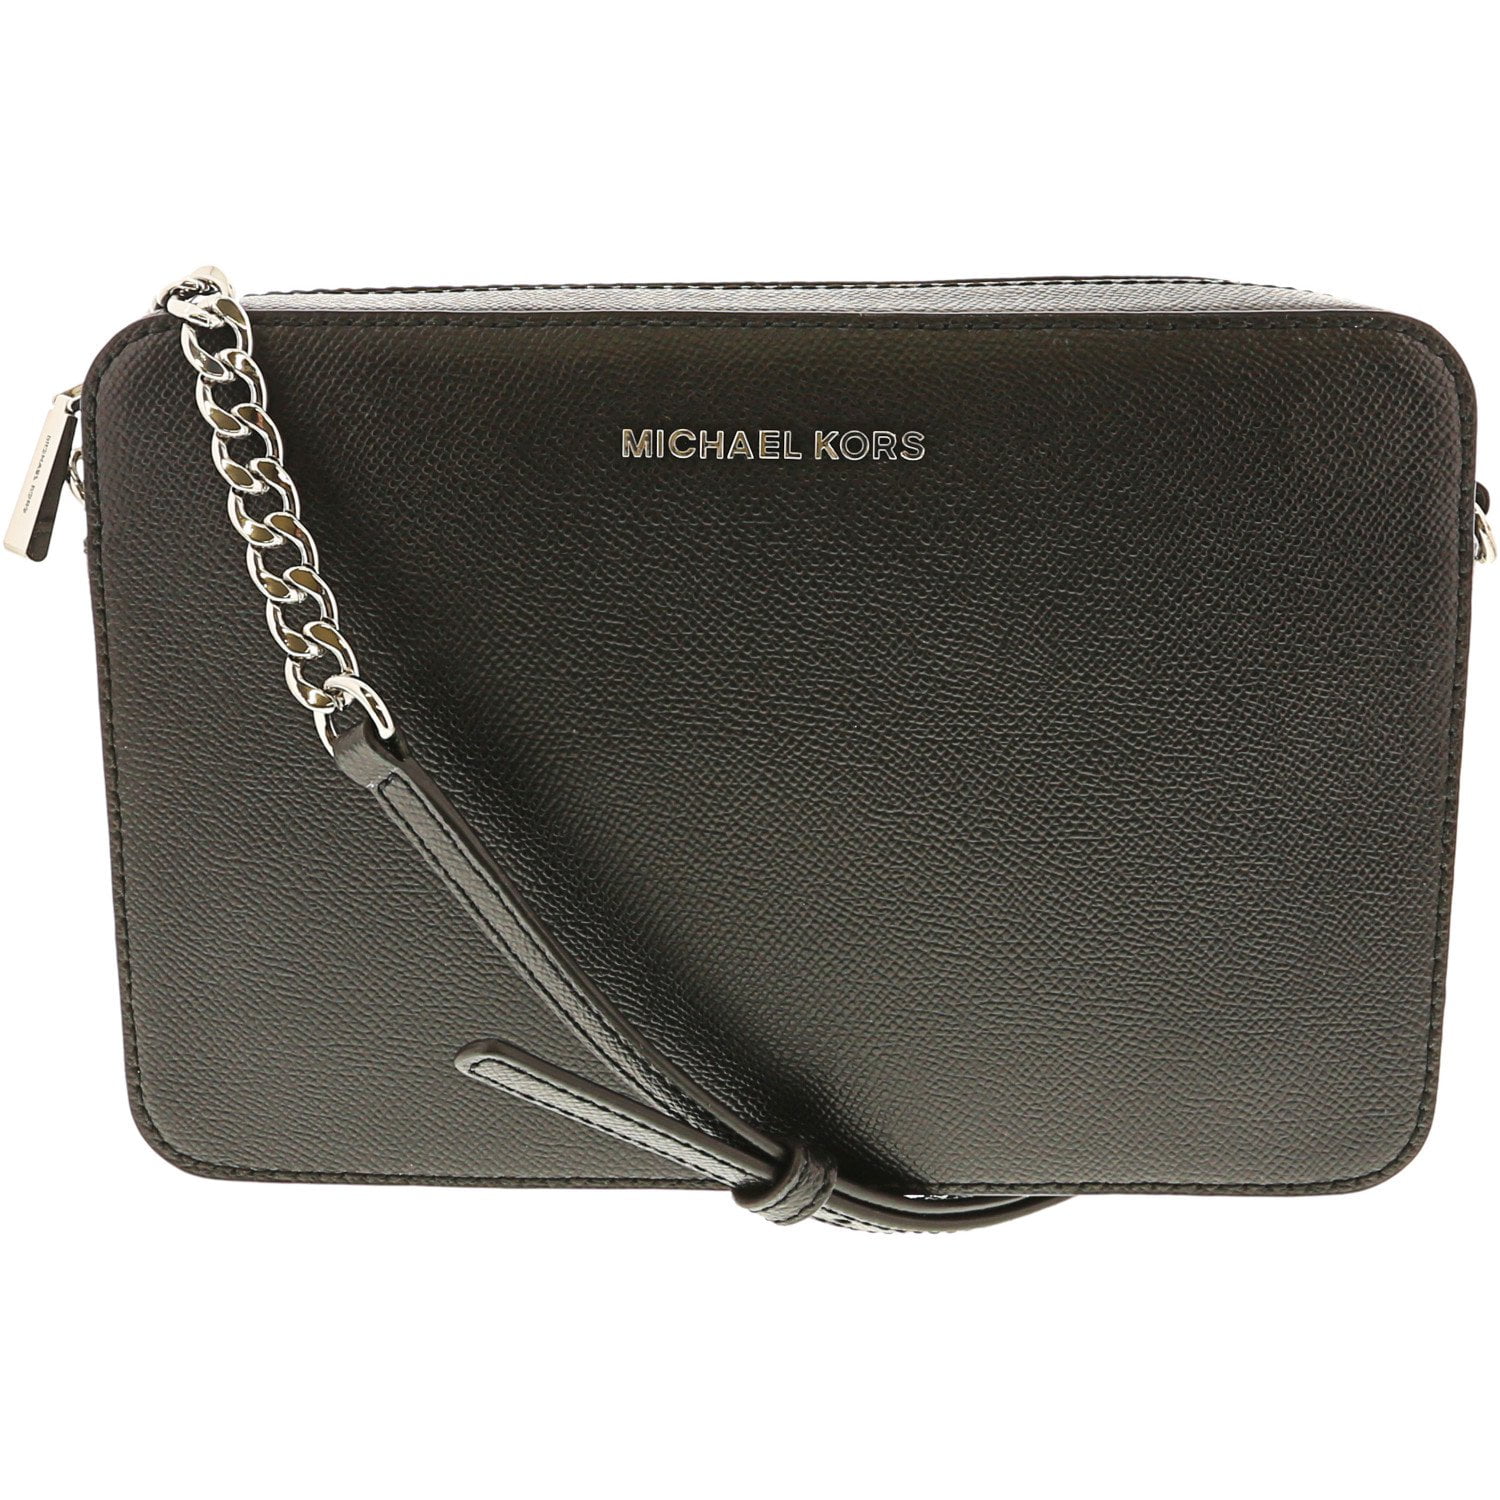 Michael Kors Jet Set Saffiano Leather Crossbody Bag - Black 